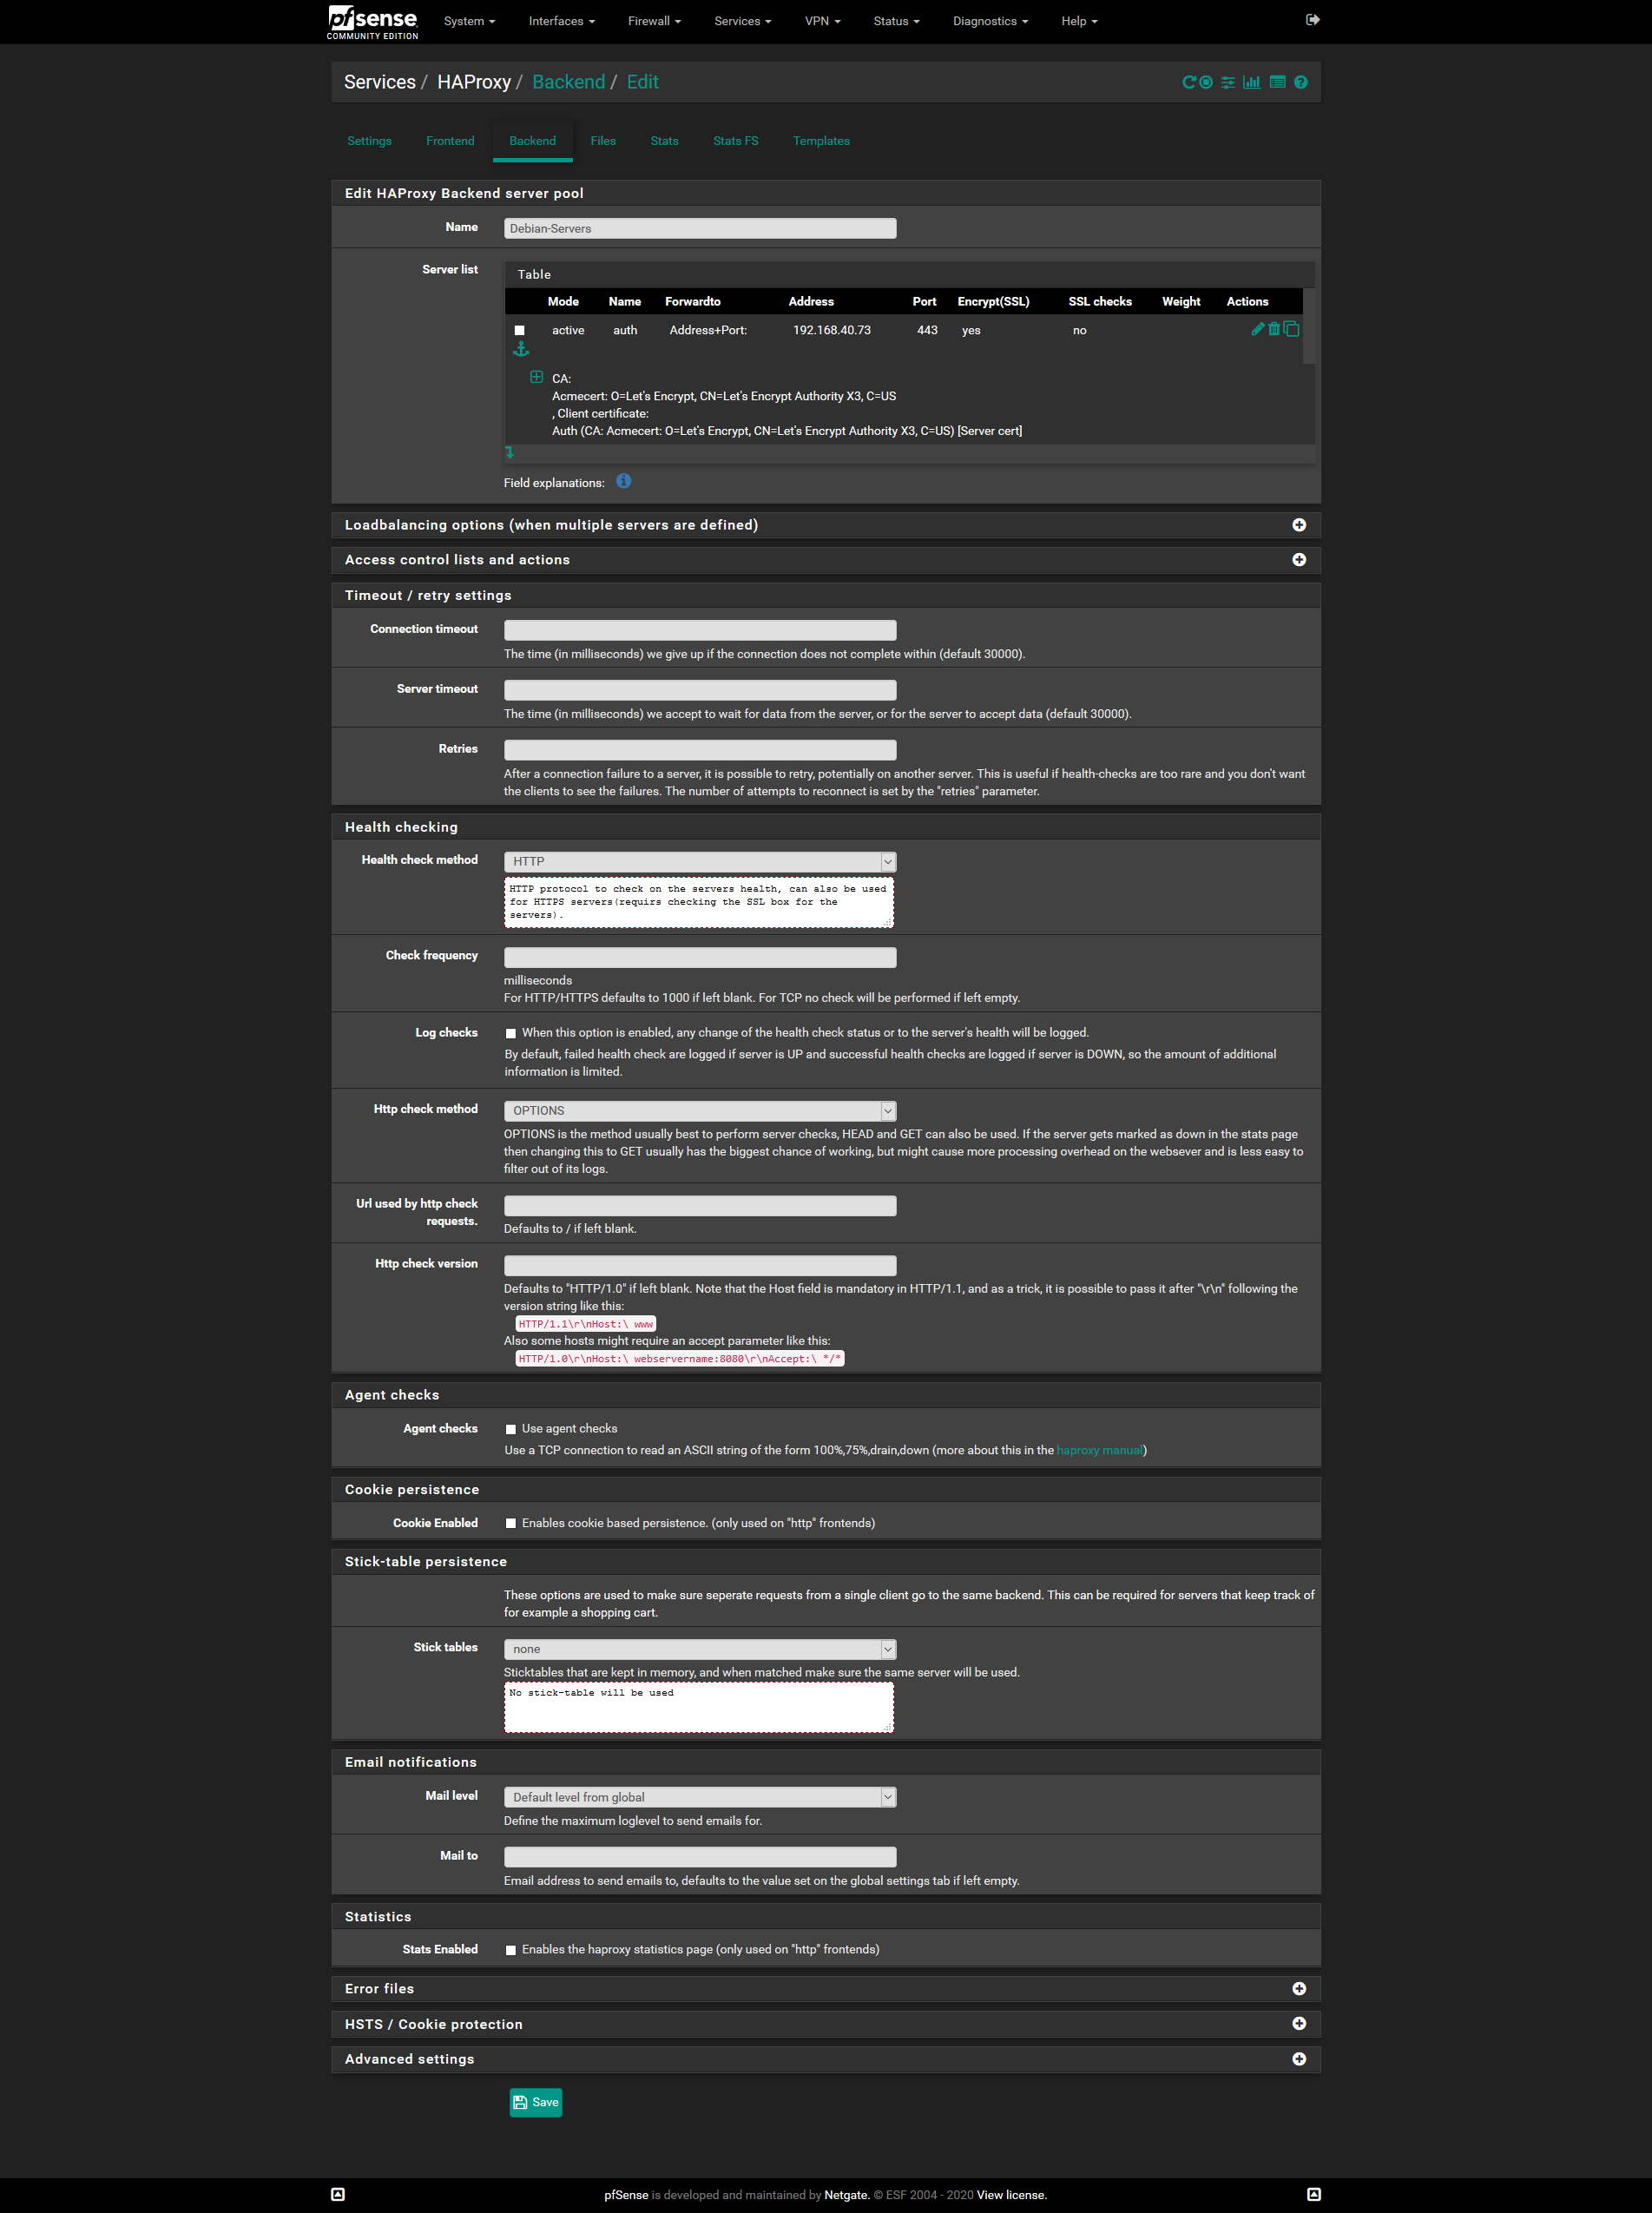 Screenshot_2020-03-12 pfSense manjot net - Services HAProxy Backend Edit.png